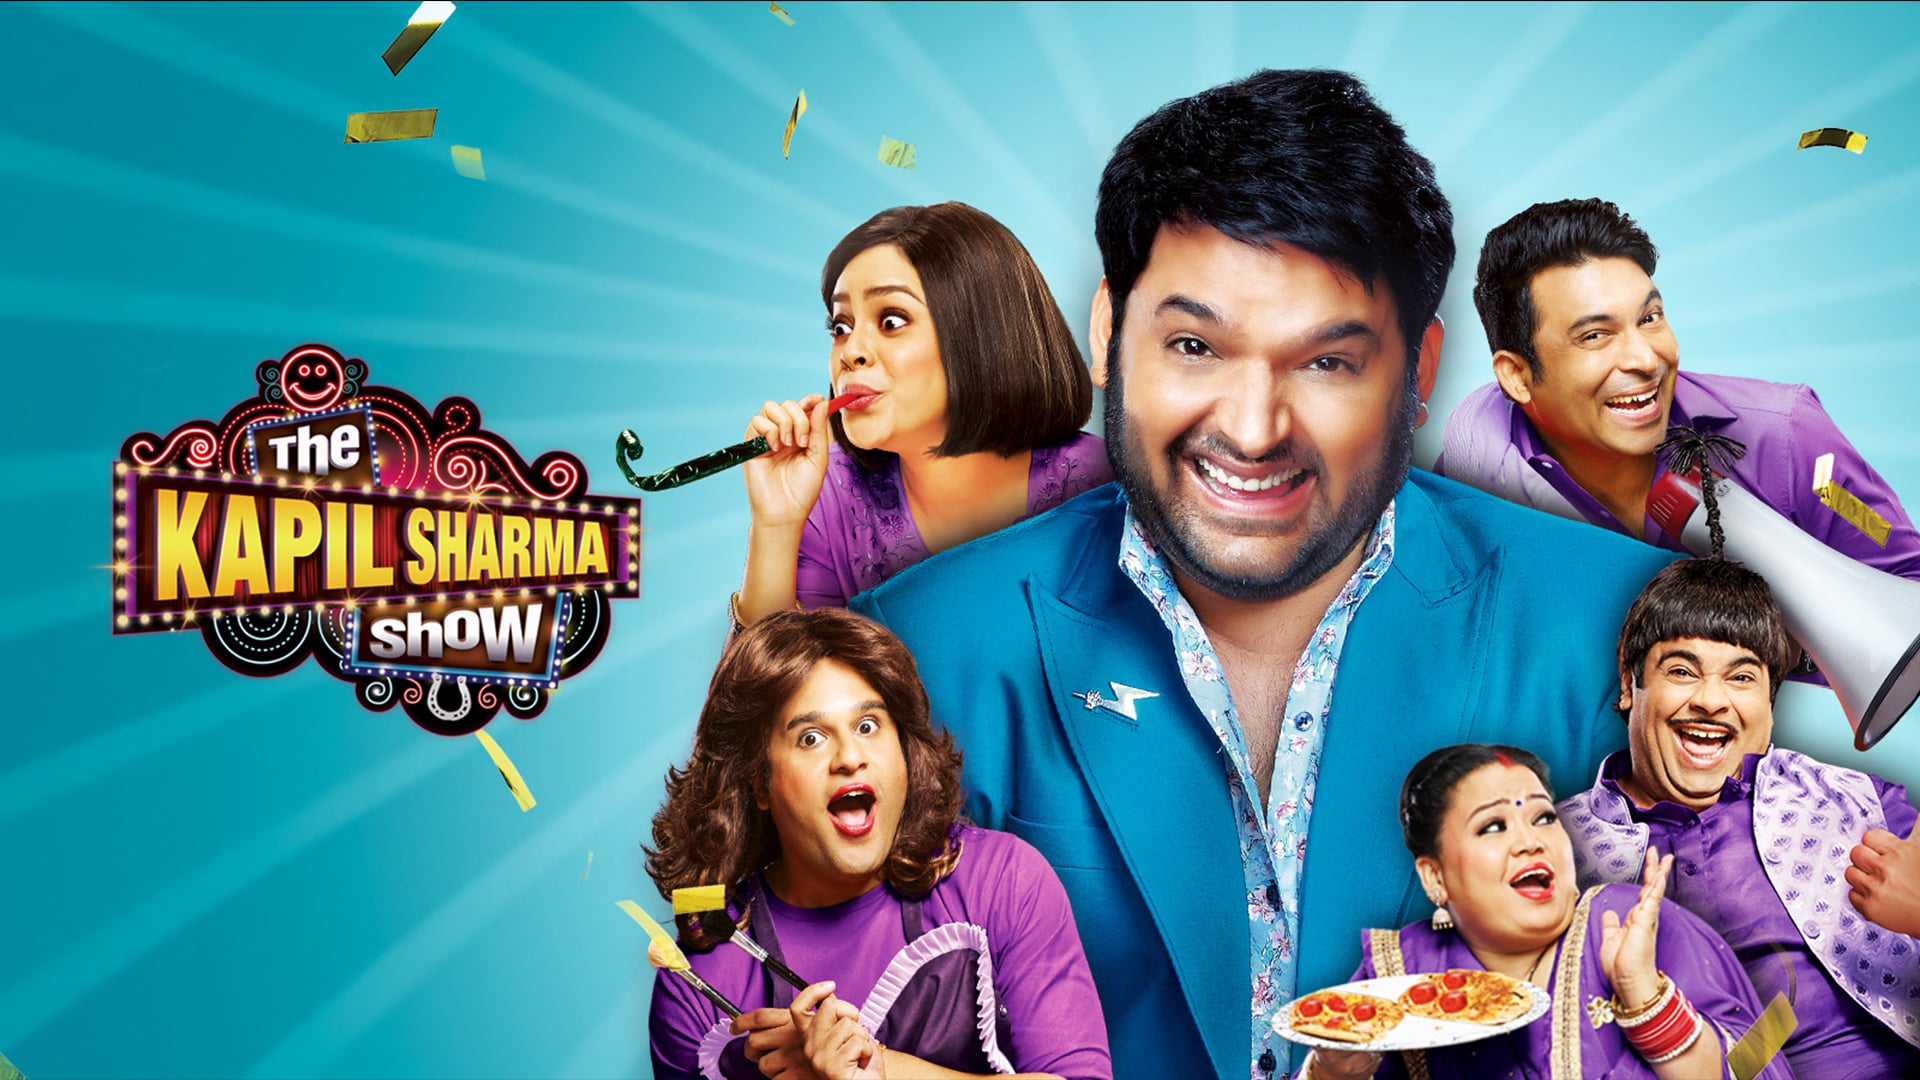 The Kapil Sharma Show - Season 2 Episode 4 : The Legend